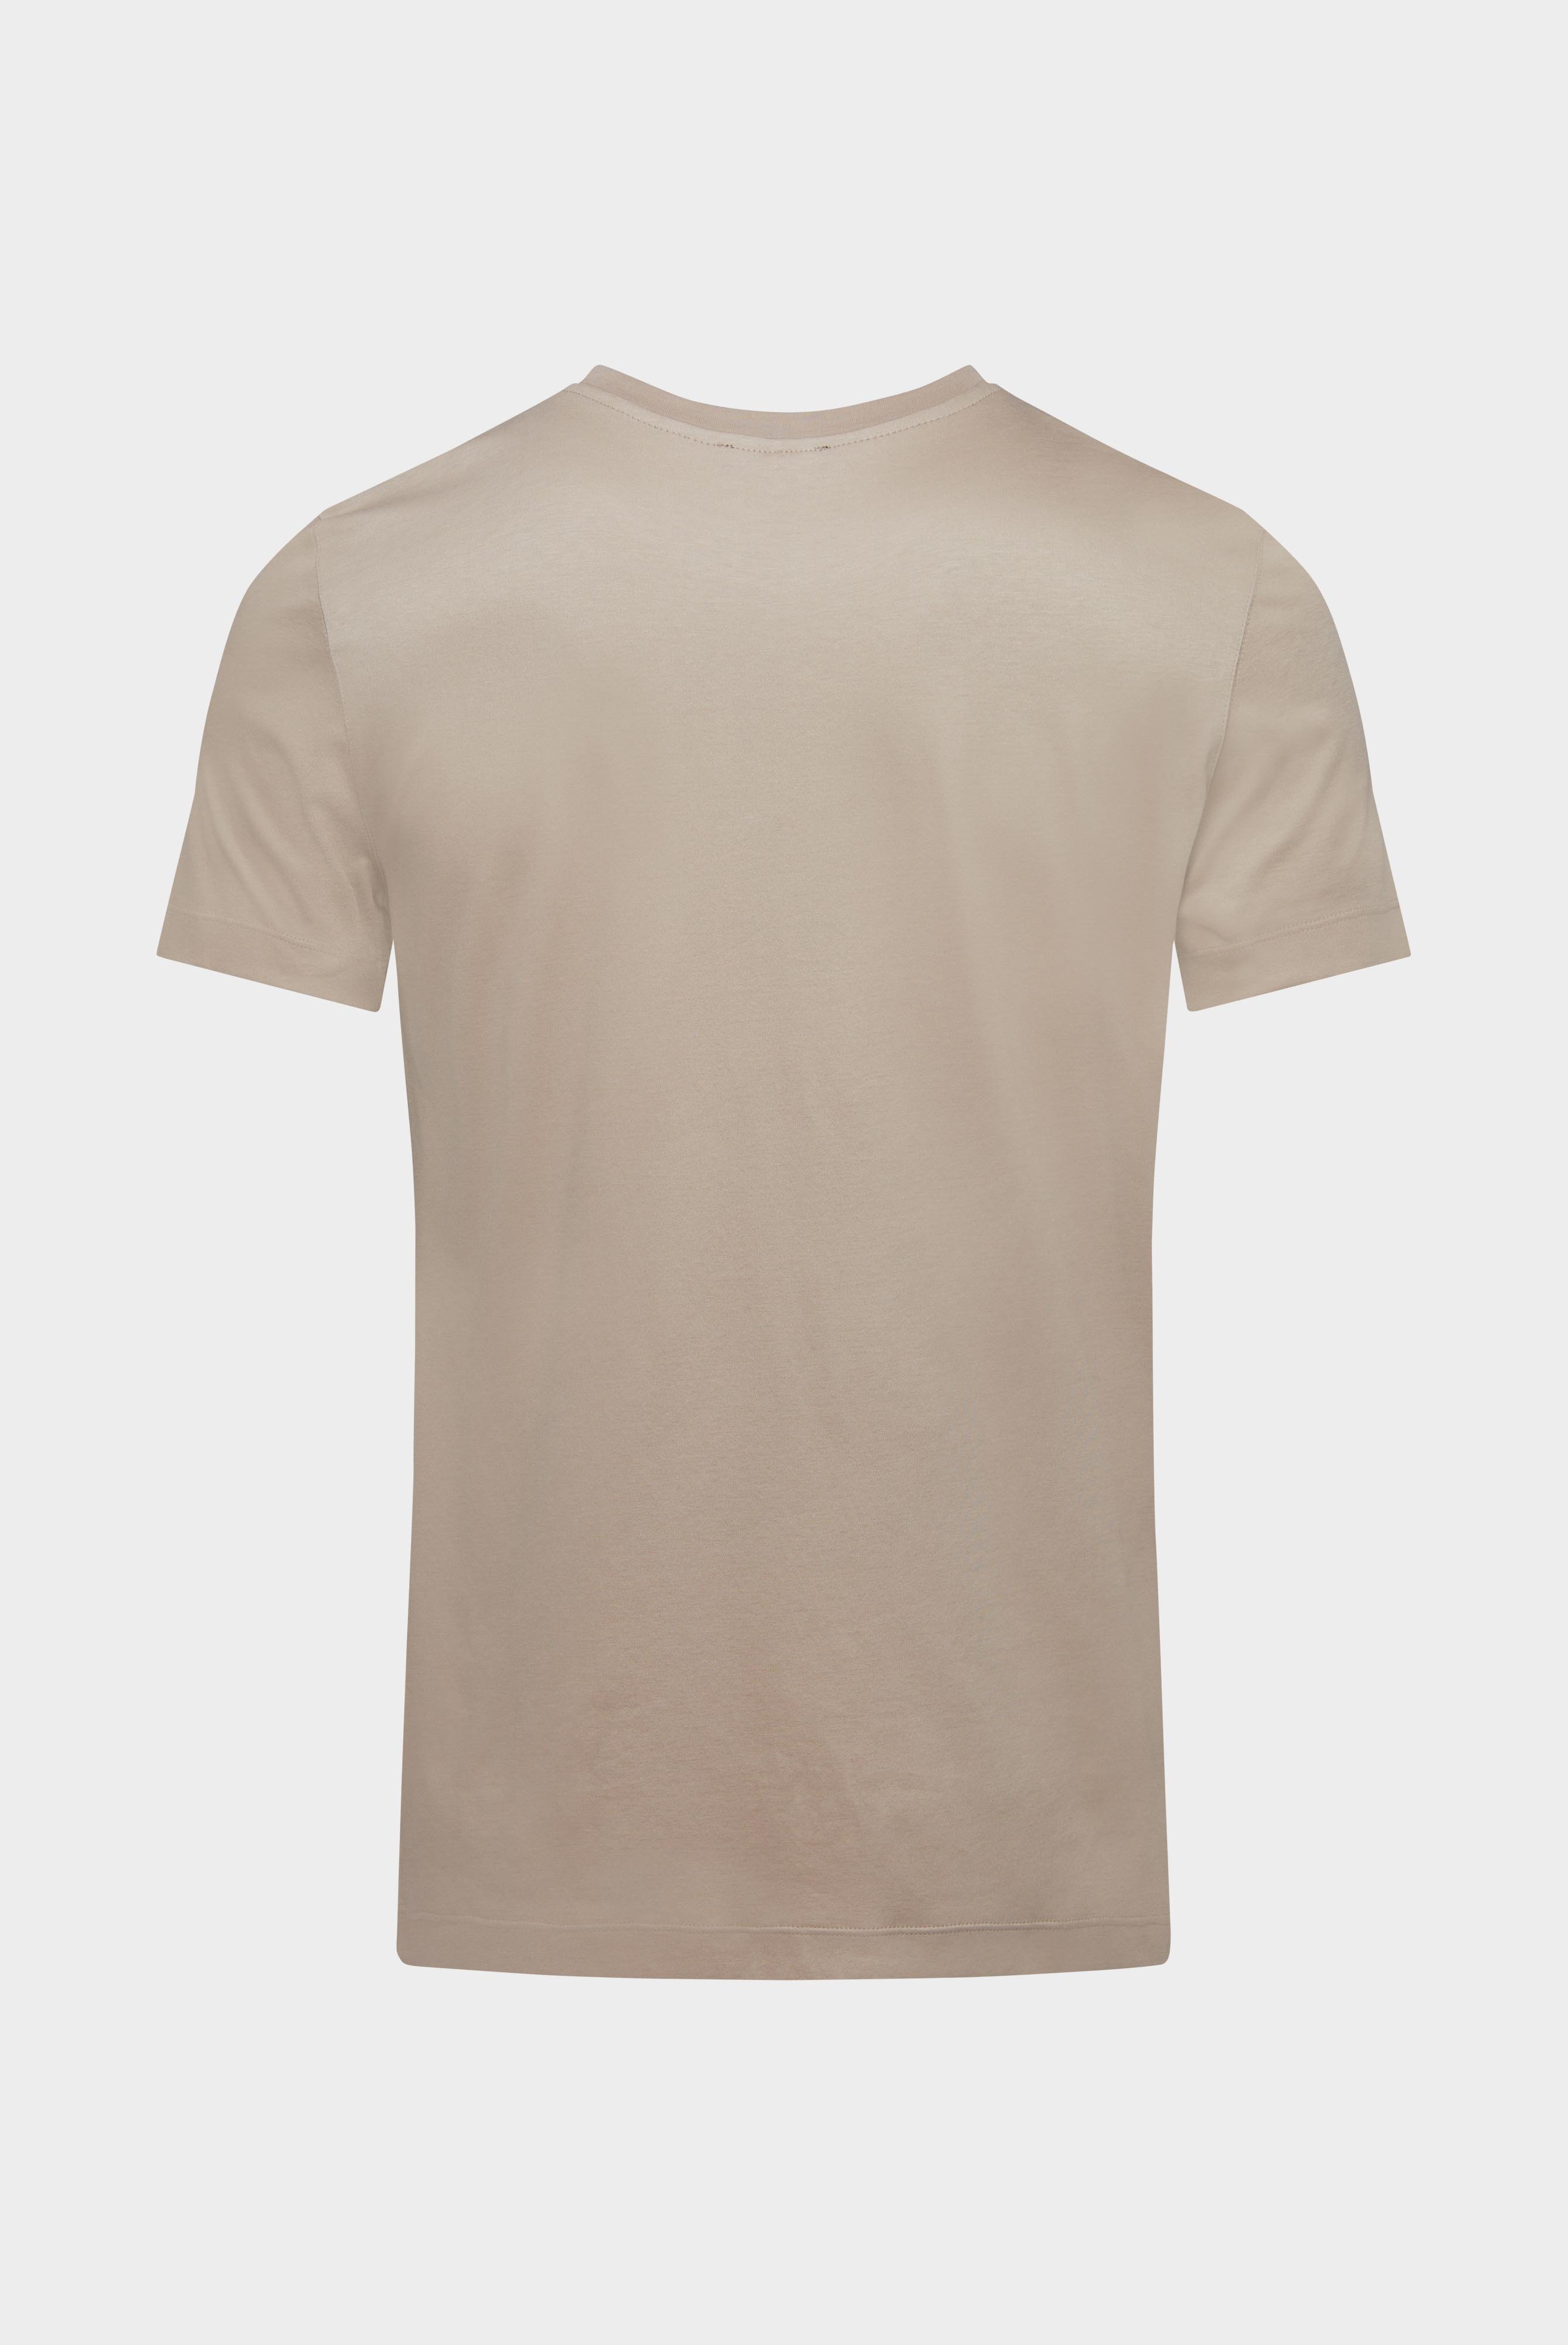 T-Shirts+T-Shirt made of Swiss Cotton+20.1717.UX.180031.140.XL